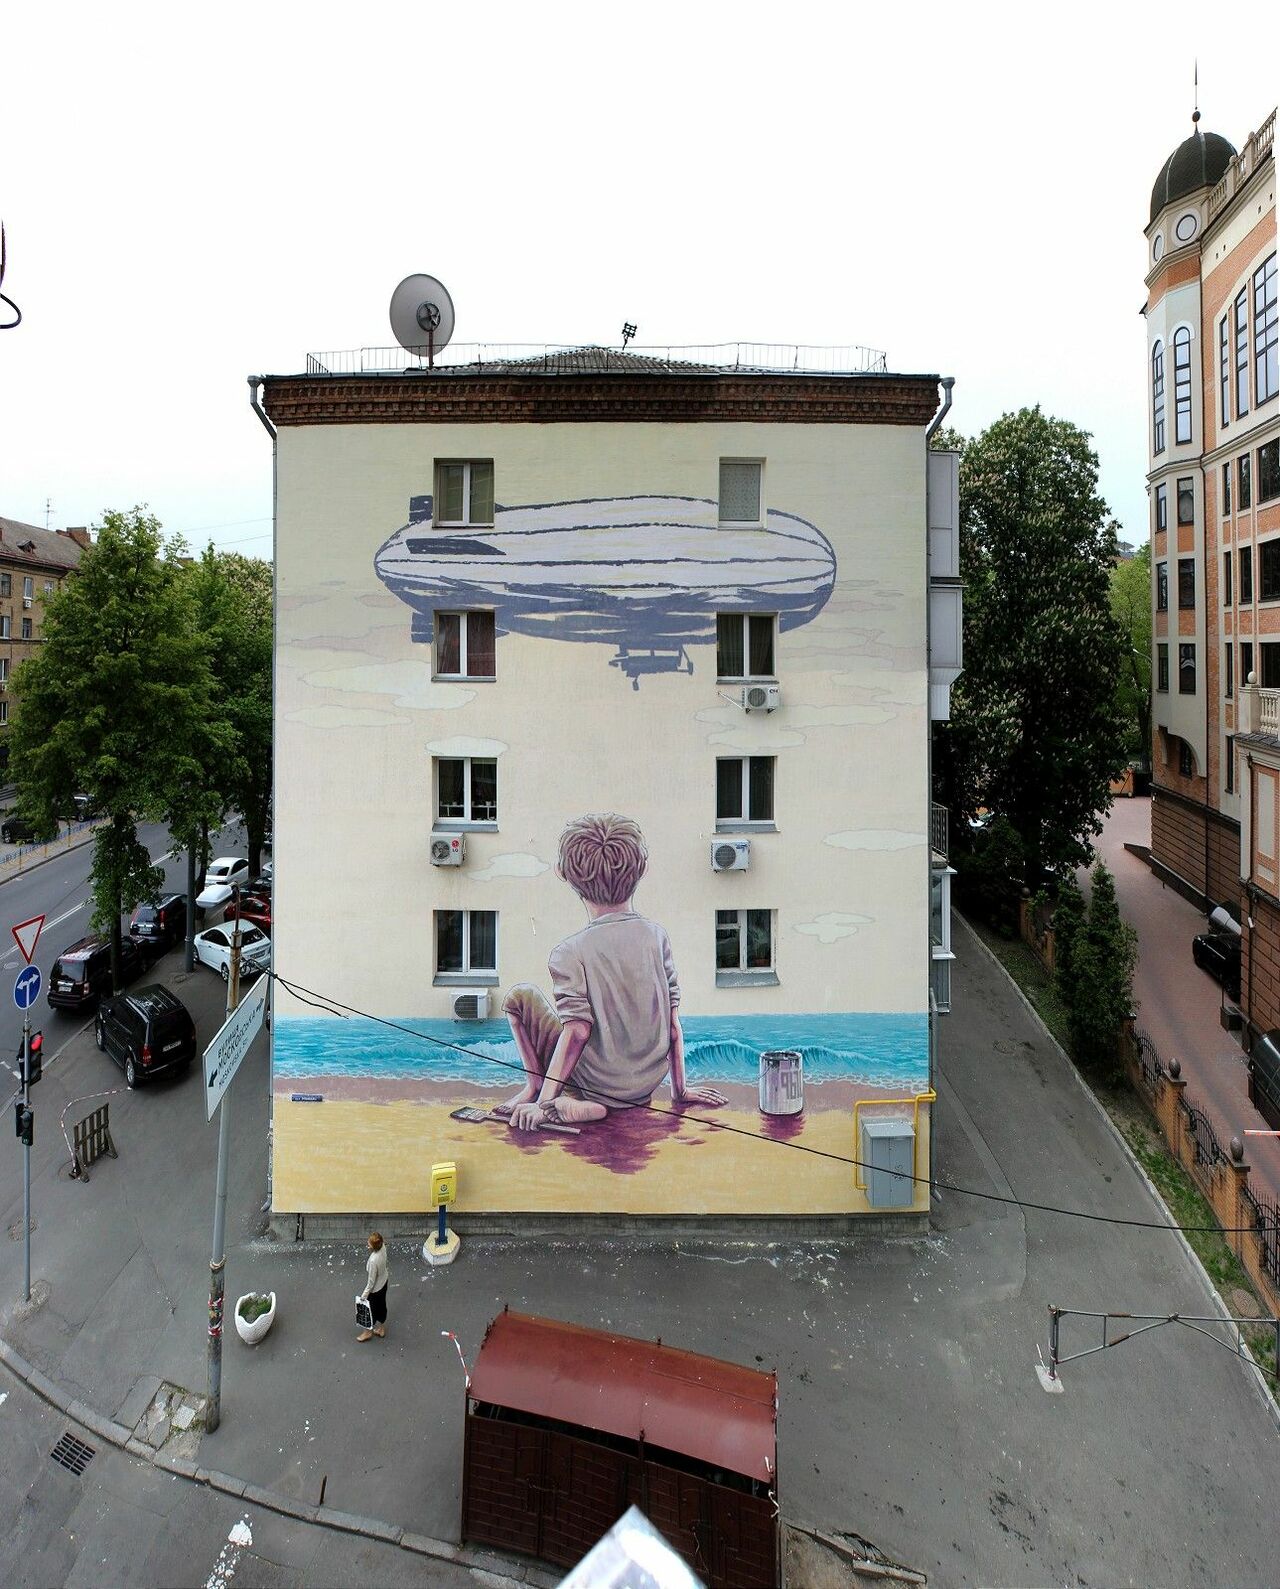 “The Boy & The Sea” by Rustam Qbic in Kiev, Ukraine #streetart #mural #graffiti #art https://t.co/eGnReH4epd